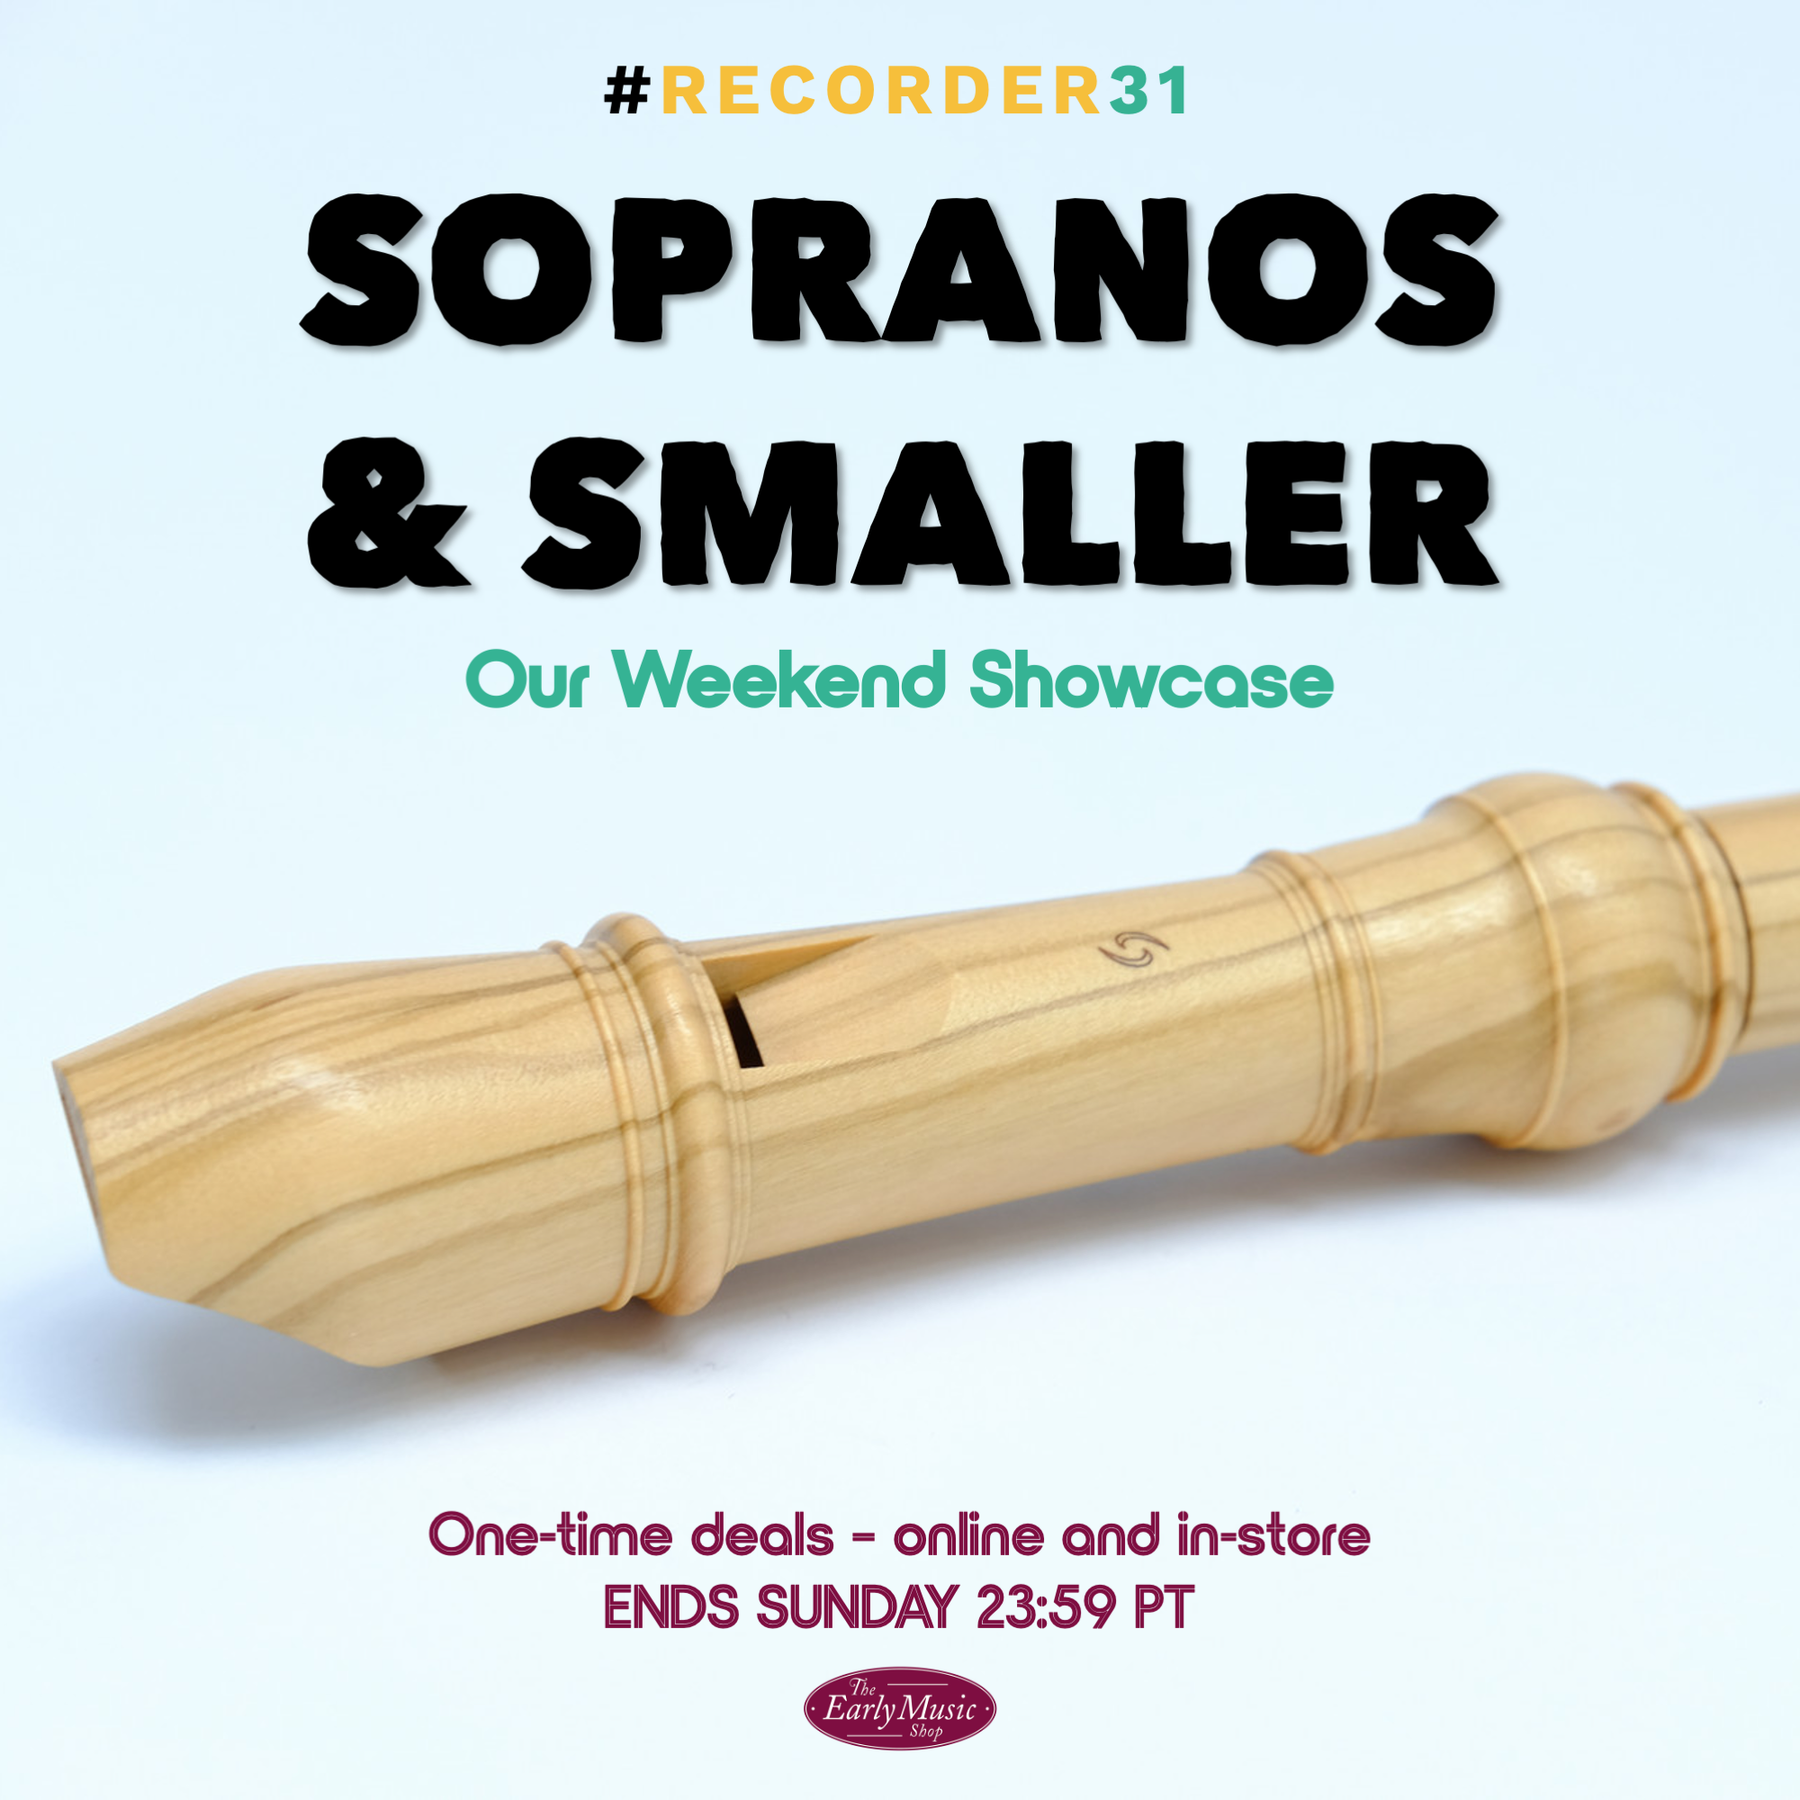 Recorder31 Day 4 | Weekend Showcase: Sopranos & Smaller